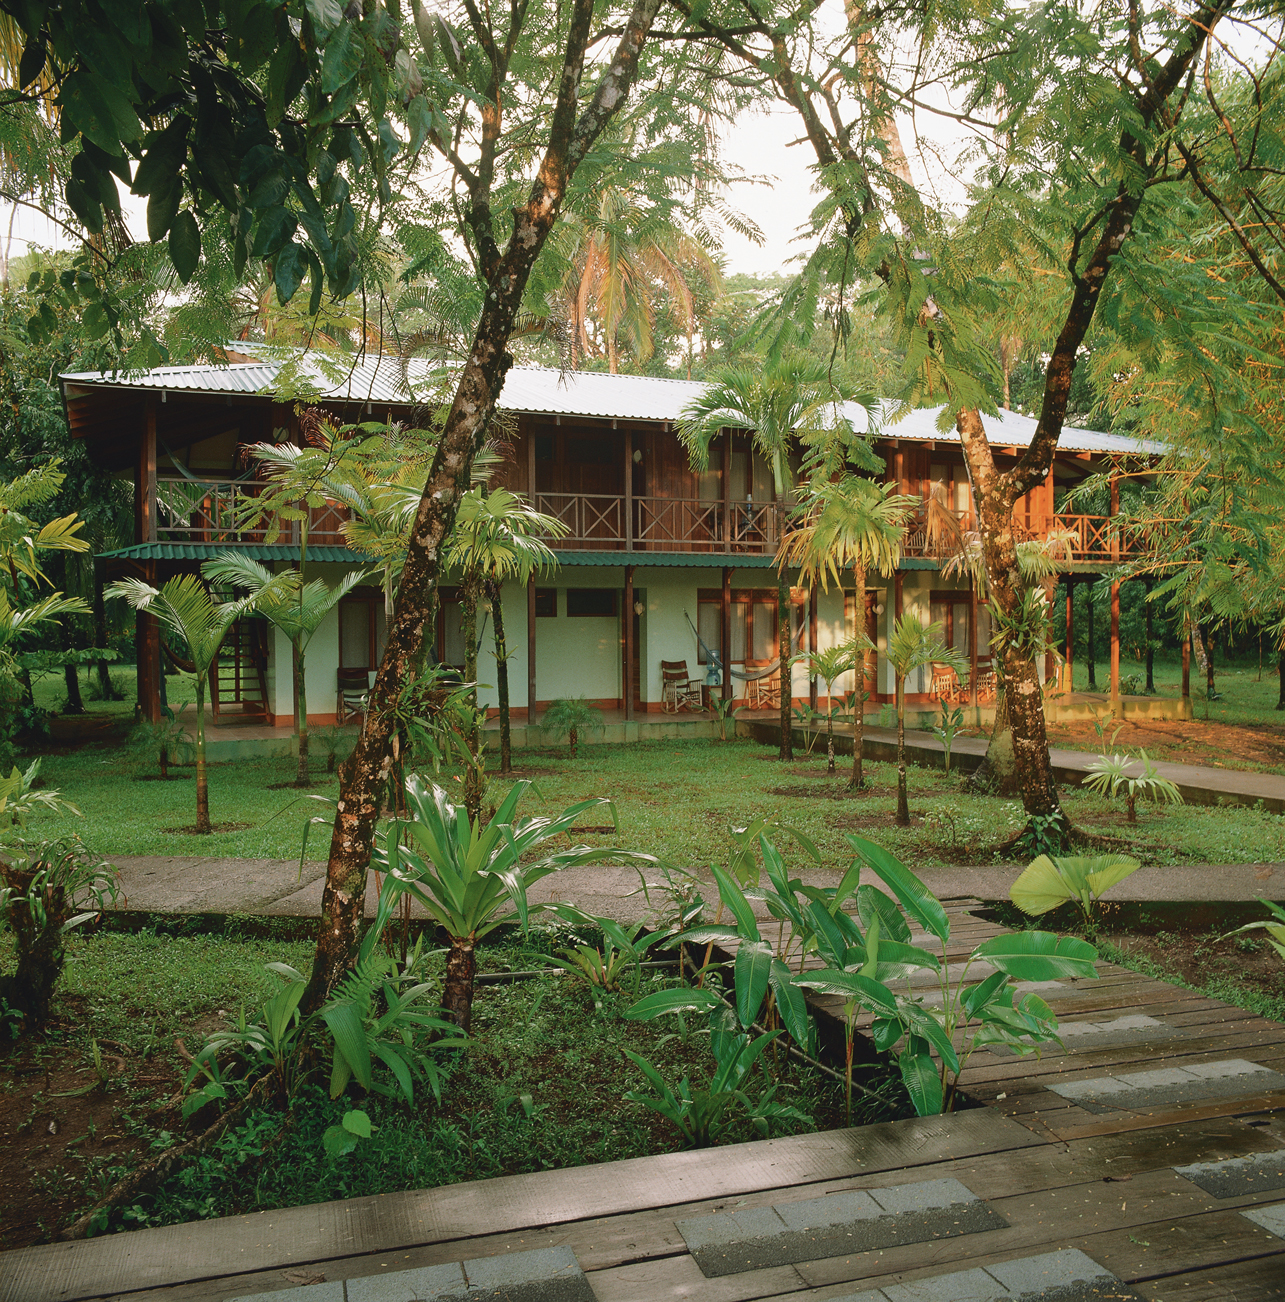 Tortuga Lodge